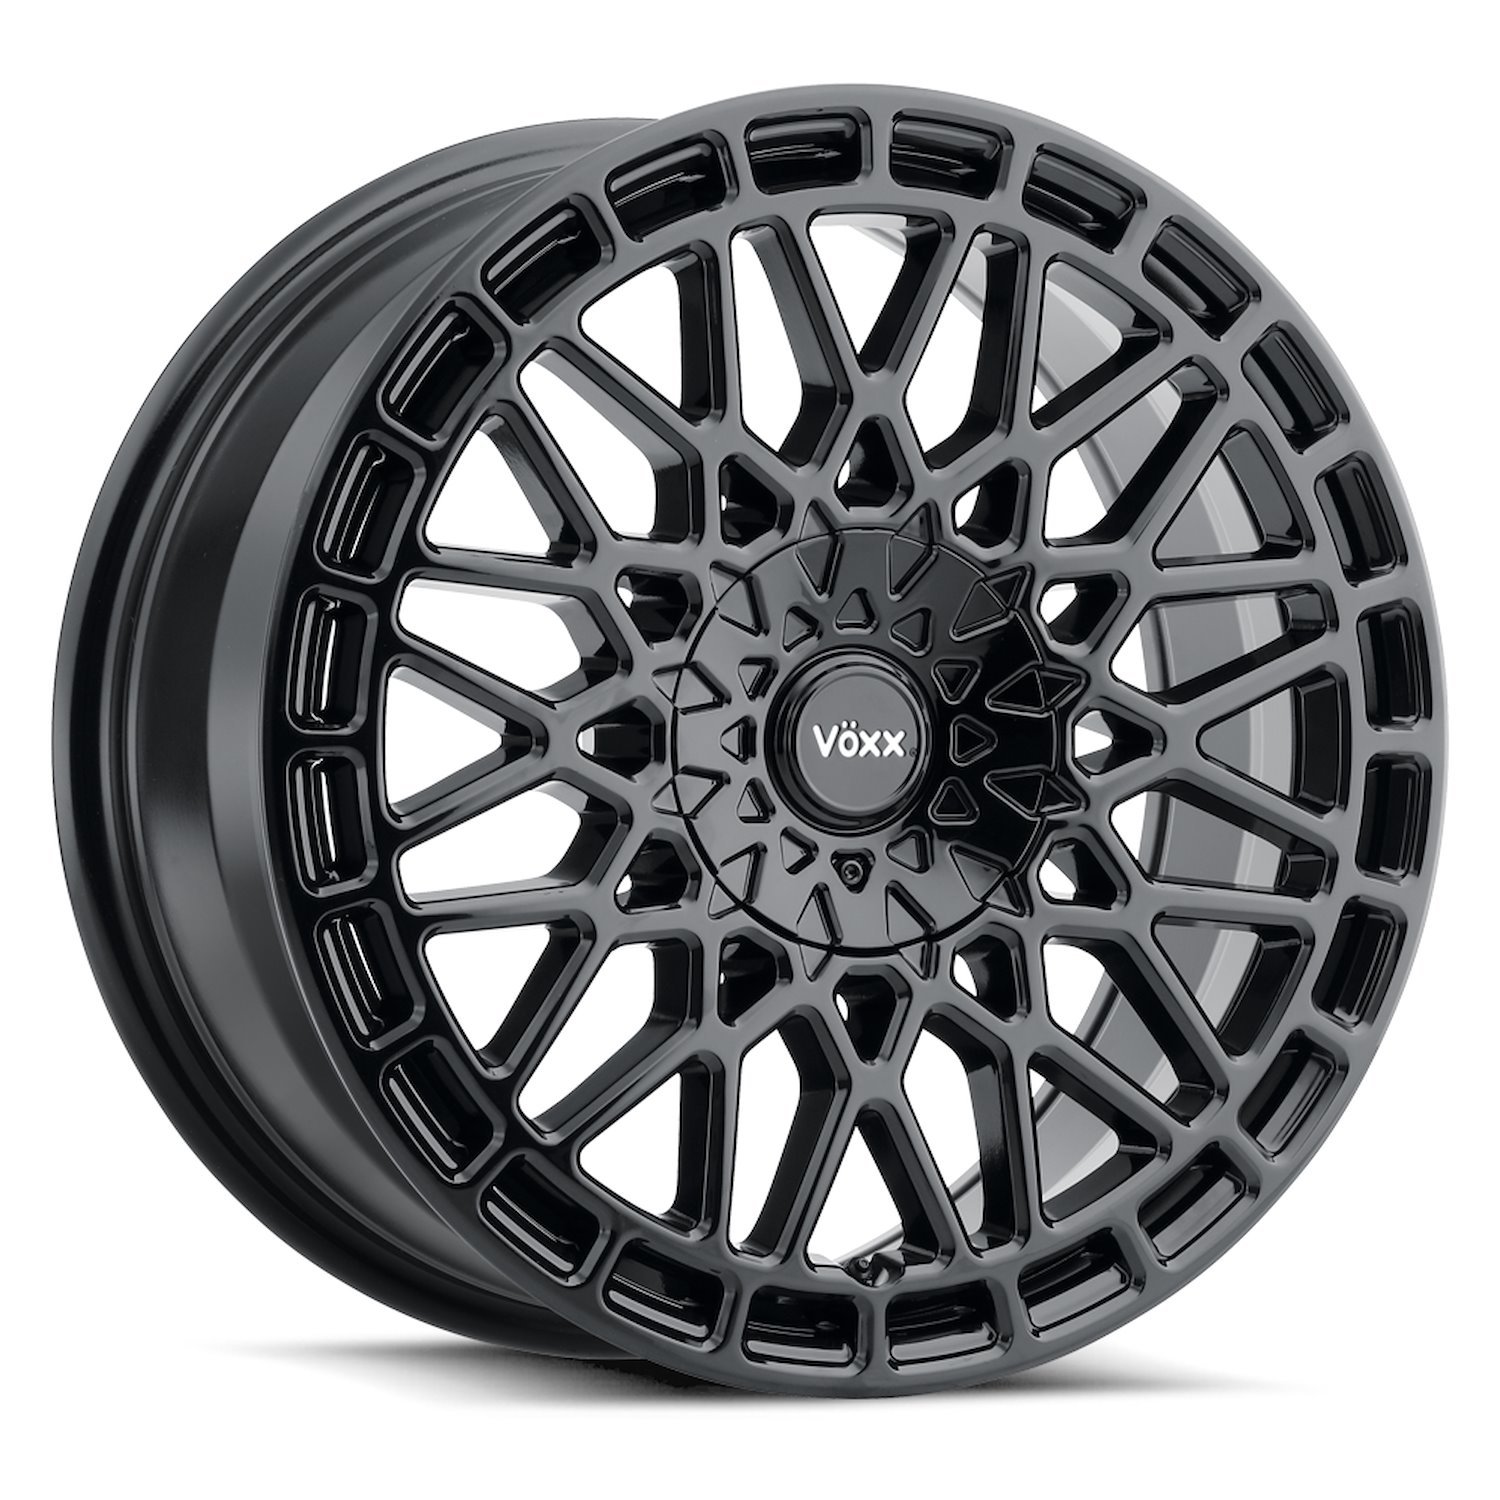 ENZ 775-5002-40 GB Enzo Wheel [Size: 17" x 7.50"] Finish: Gloss Black